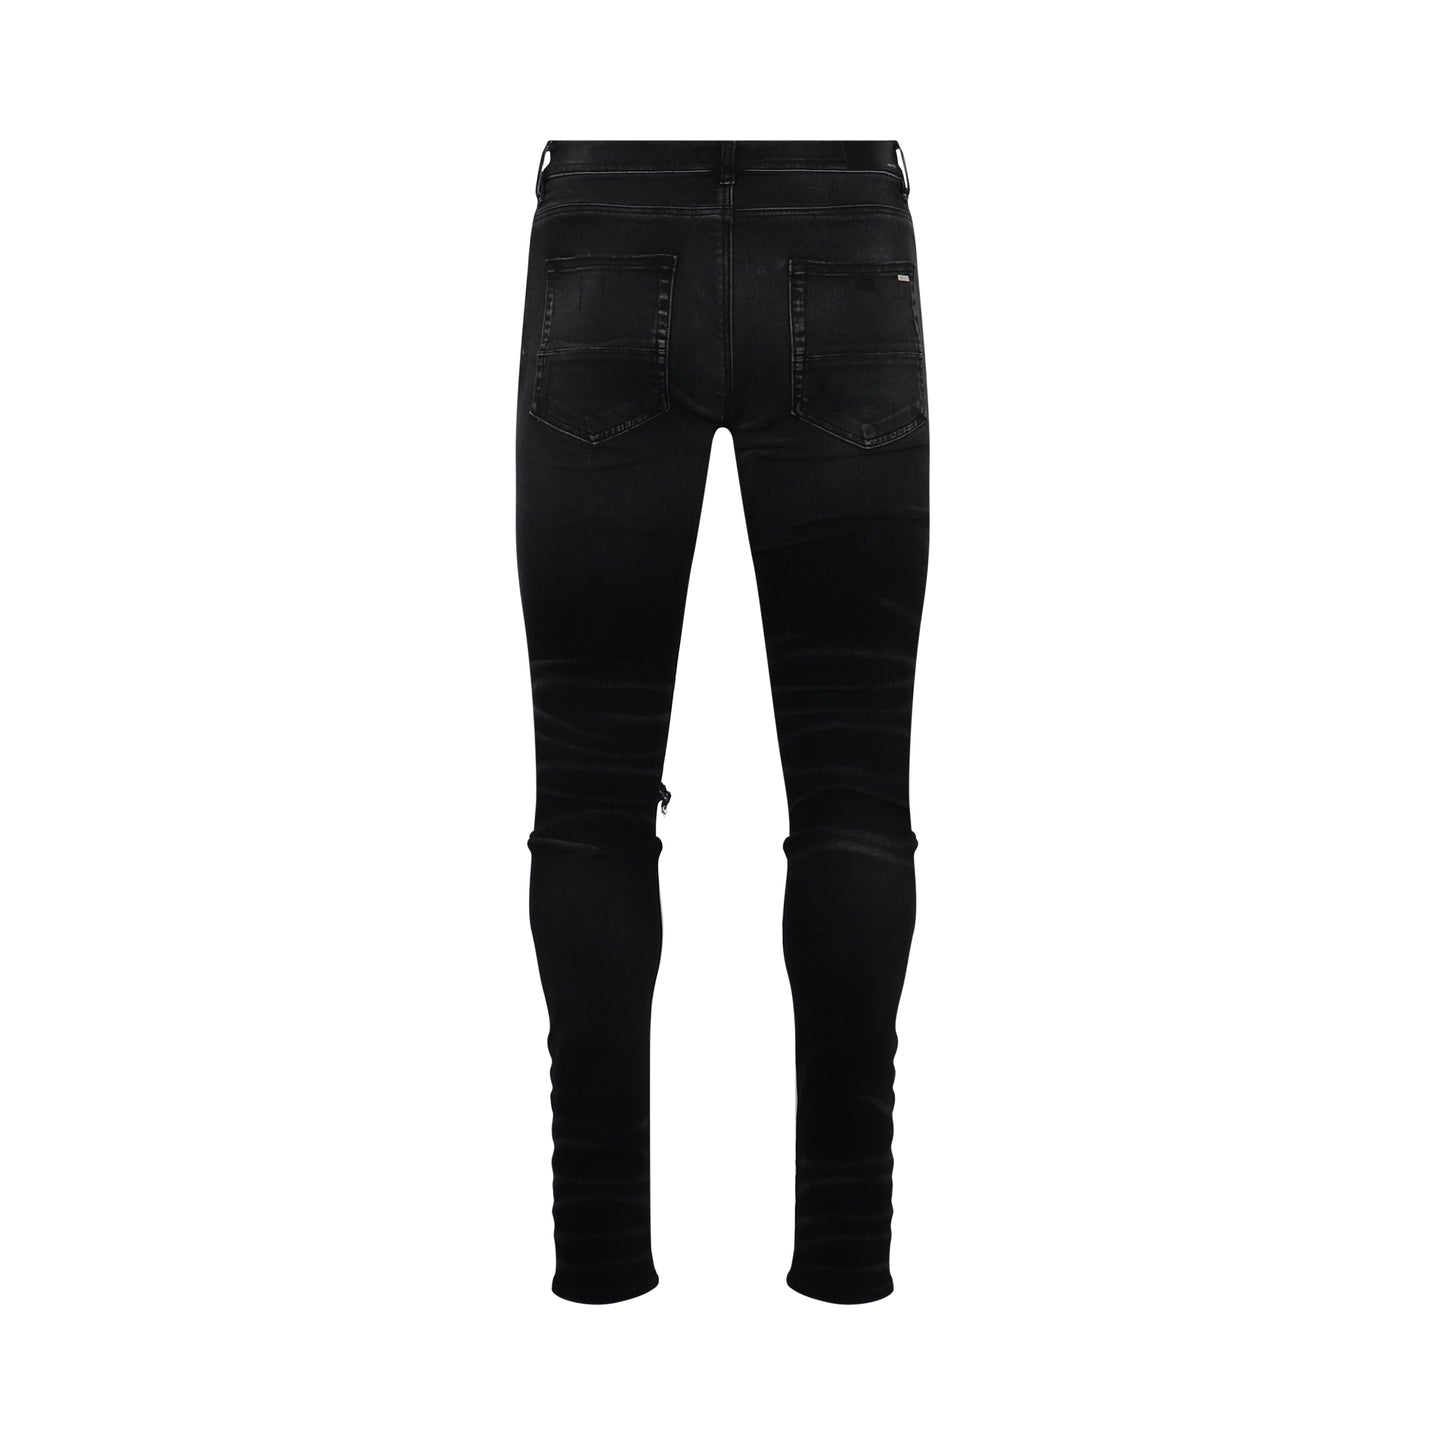 Mx1 Iridecent Jeans in Black